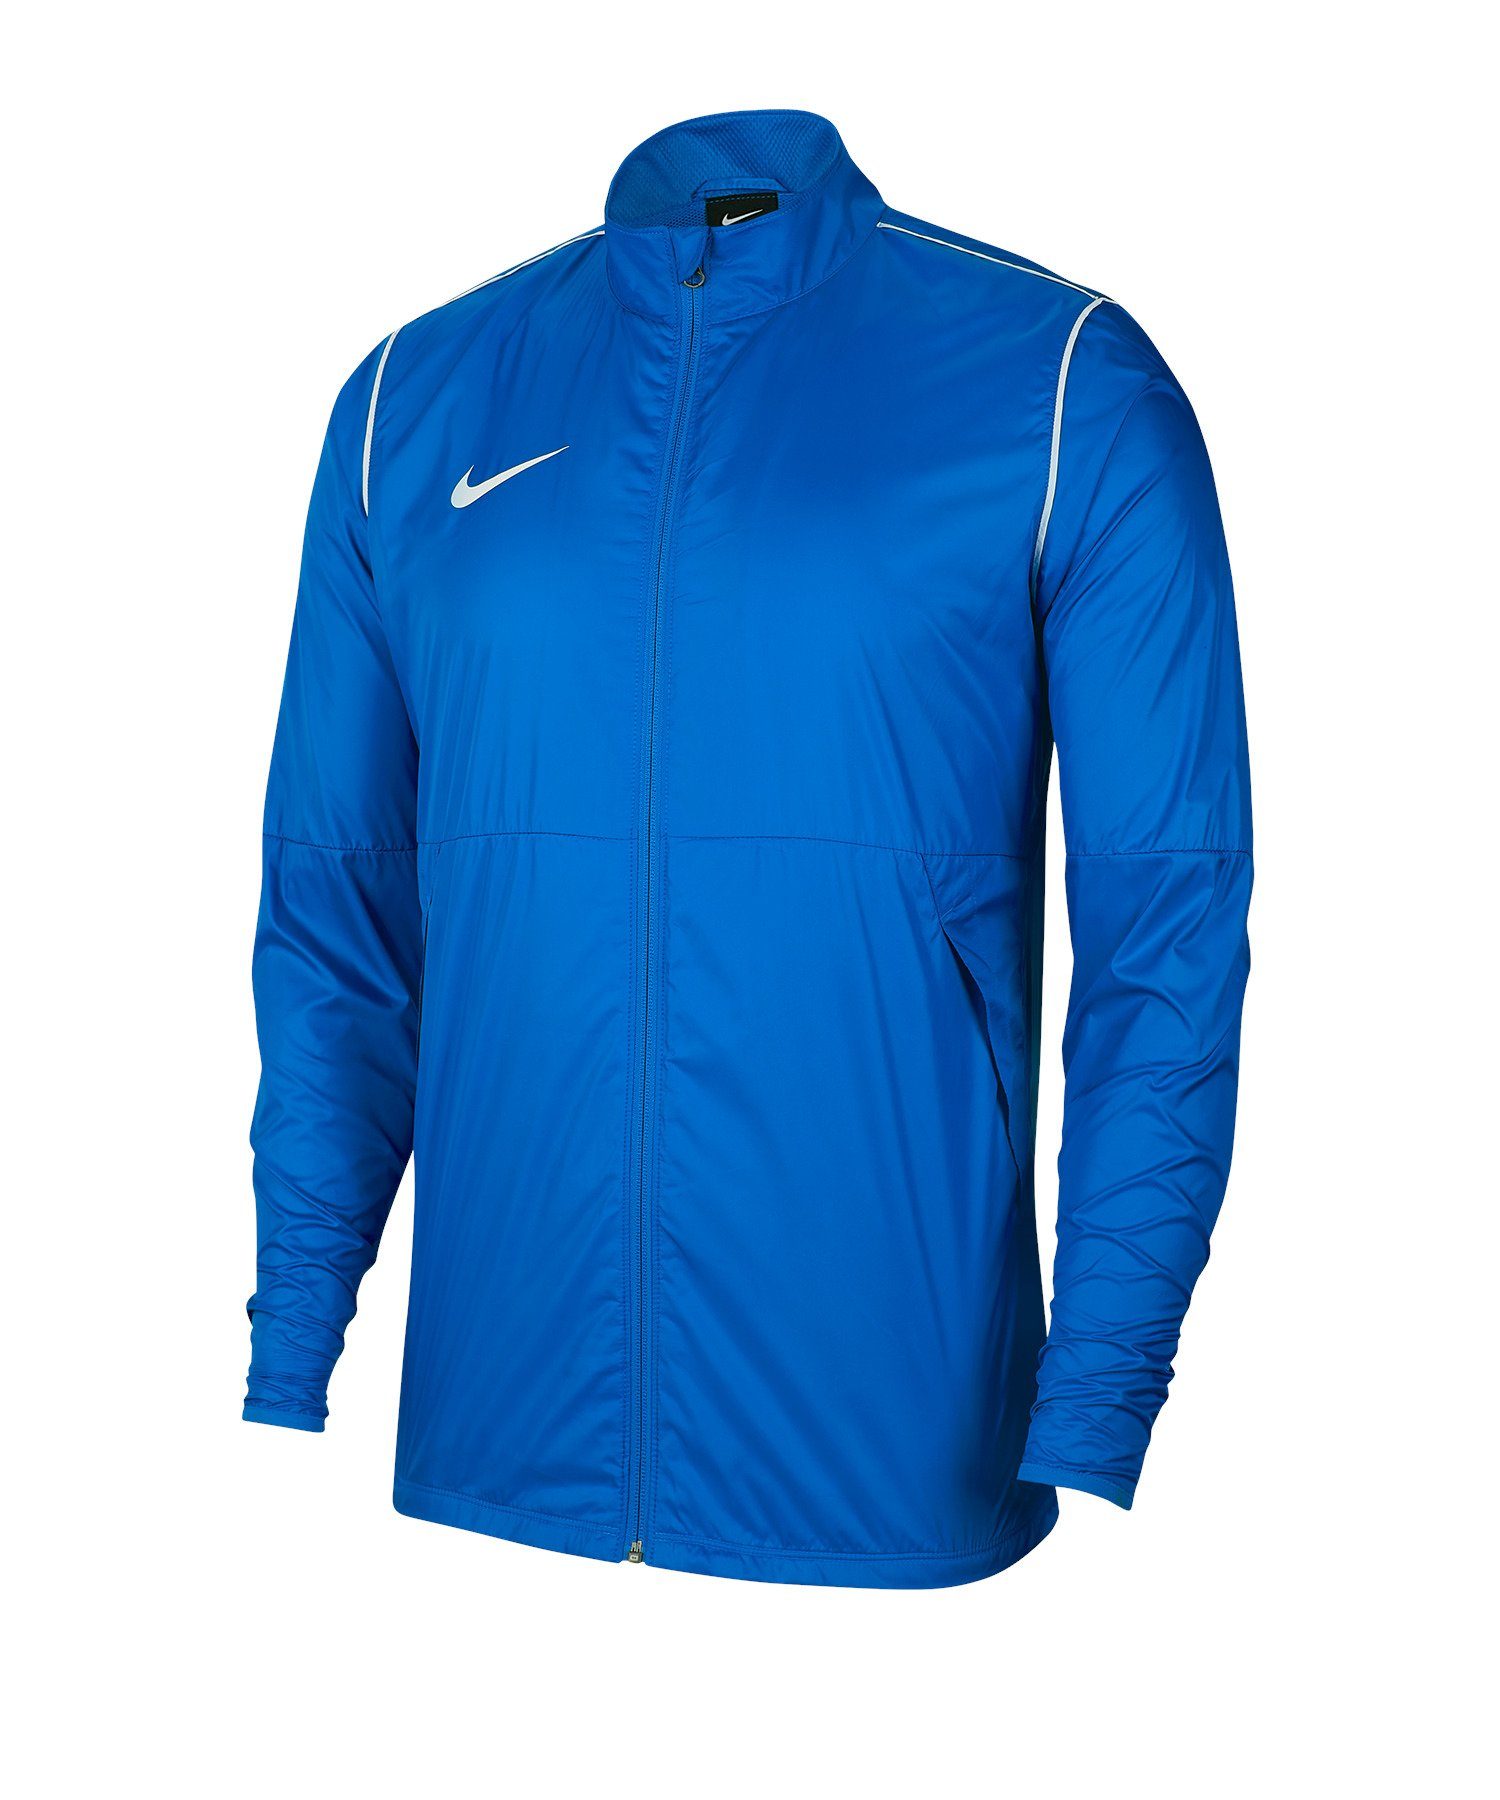 Nike Sweatjacke Park 20 Regenjacke blau